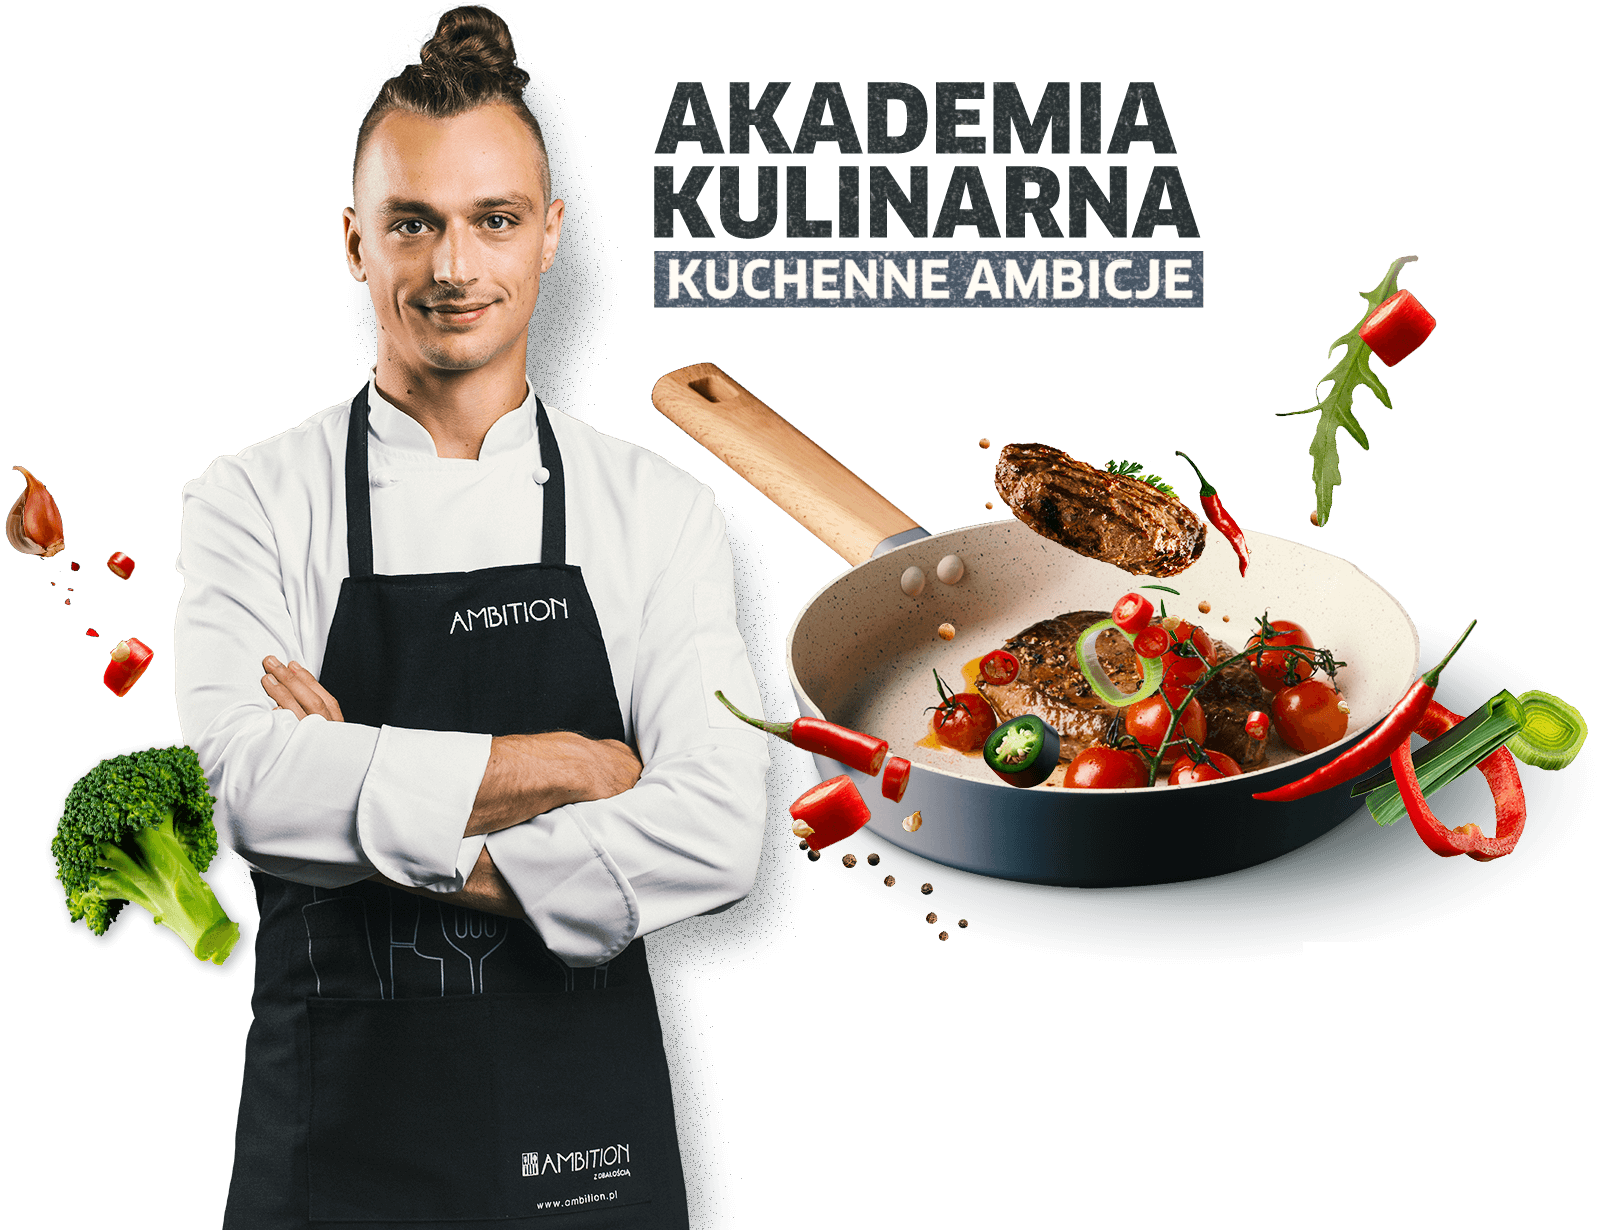 Akademia Kulinarna Kuchenne Ambicje